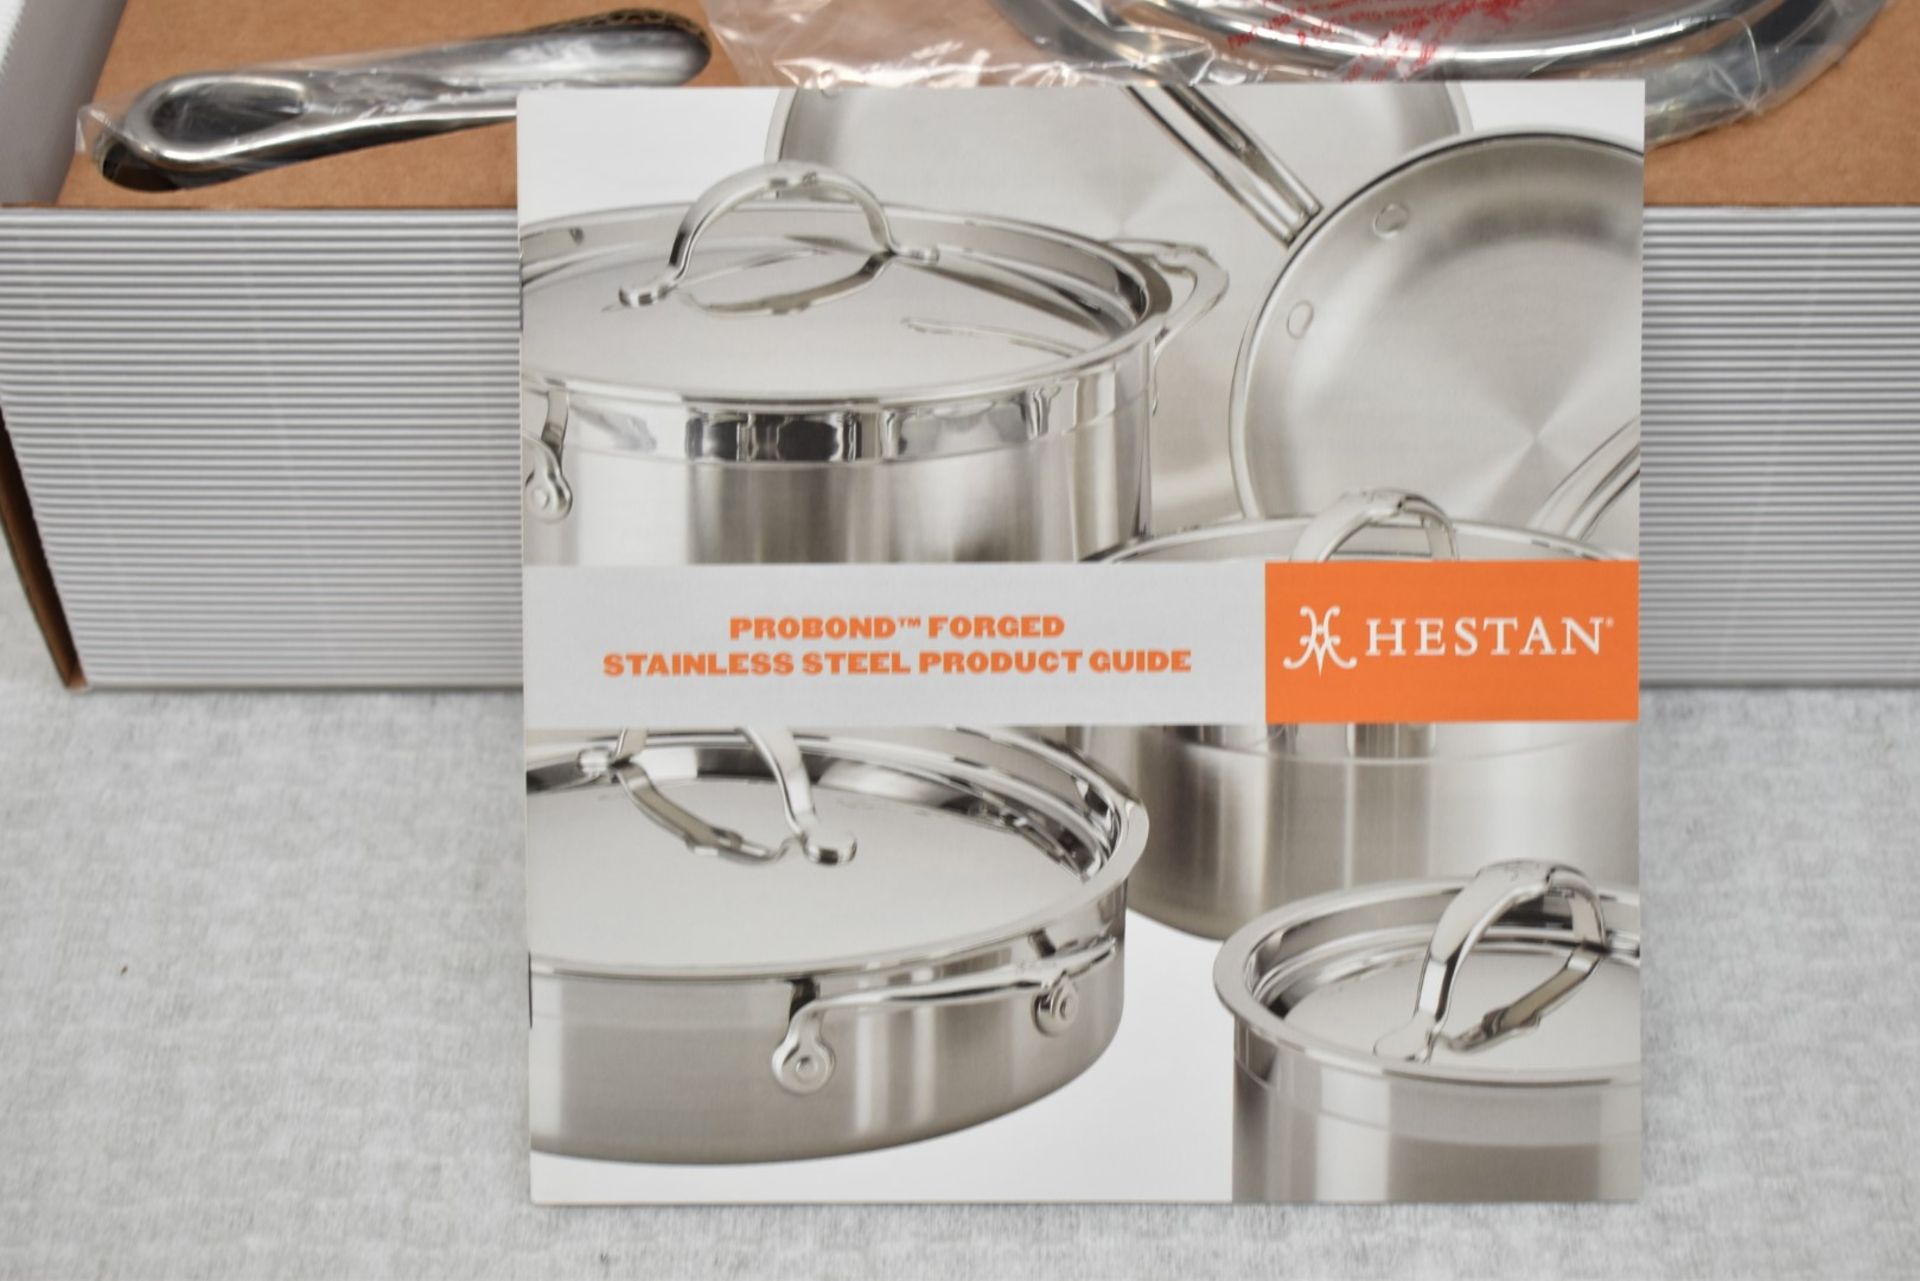 1 x HESTAN ProBond Professional Standard Stainless Steel Saucepan with Lid (16cm) - Original - Image 6 of 10